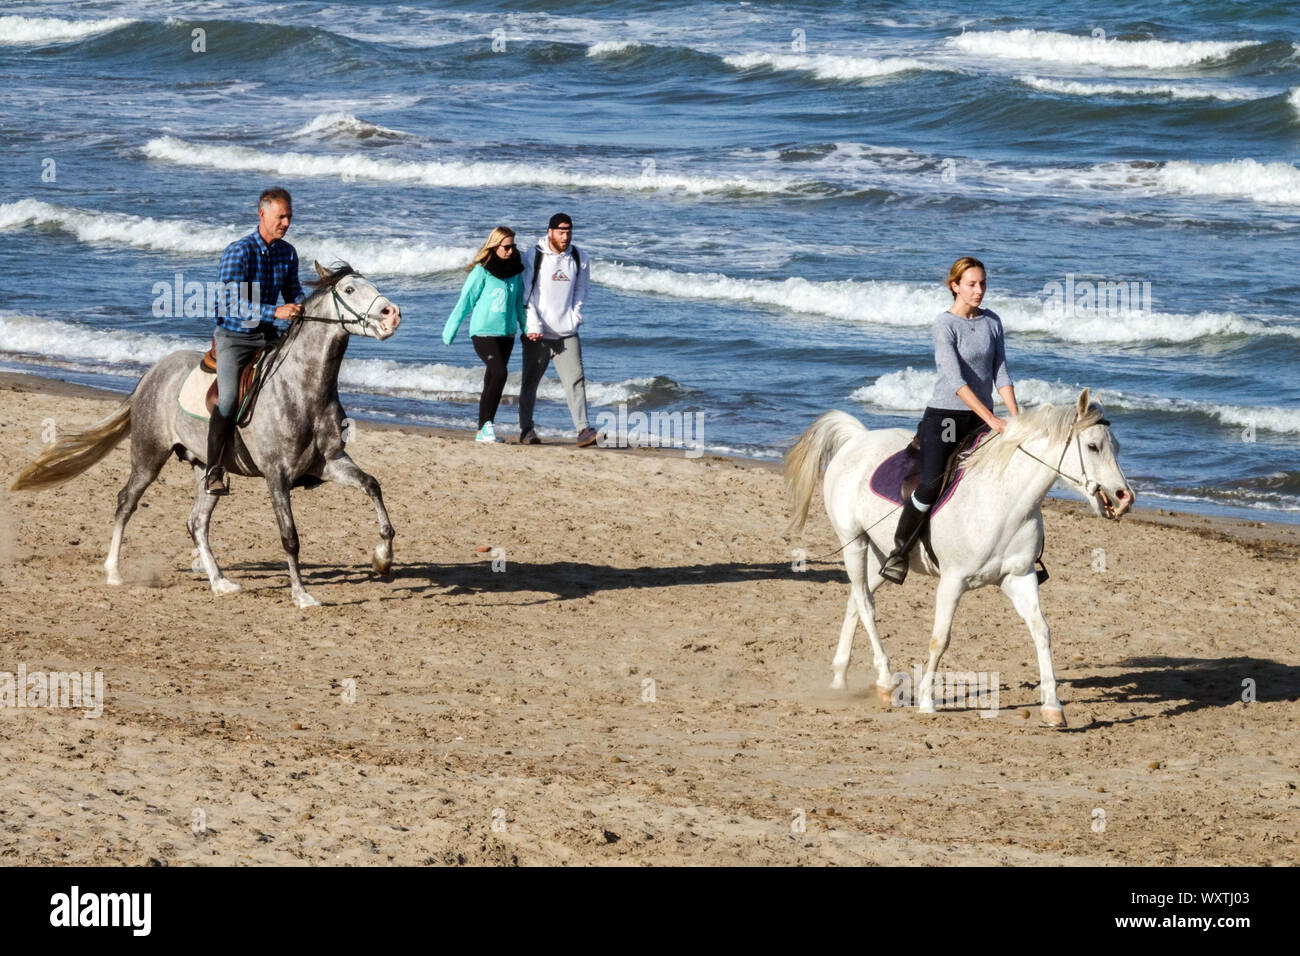 People Walking Beach Horse riders Seaside beach couple walking Stock Photo